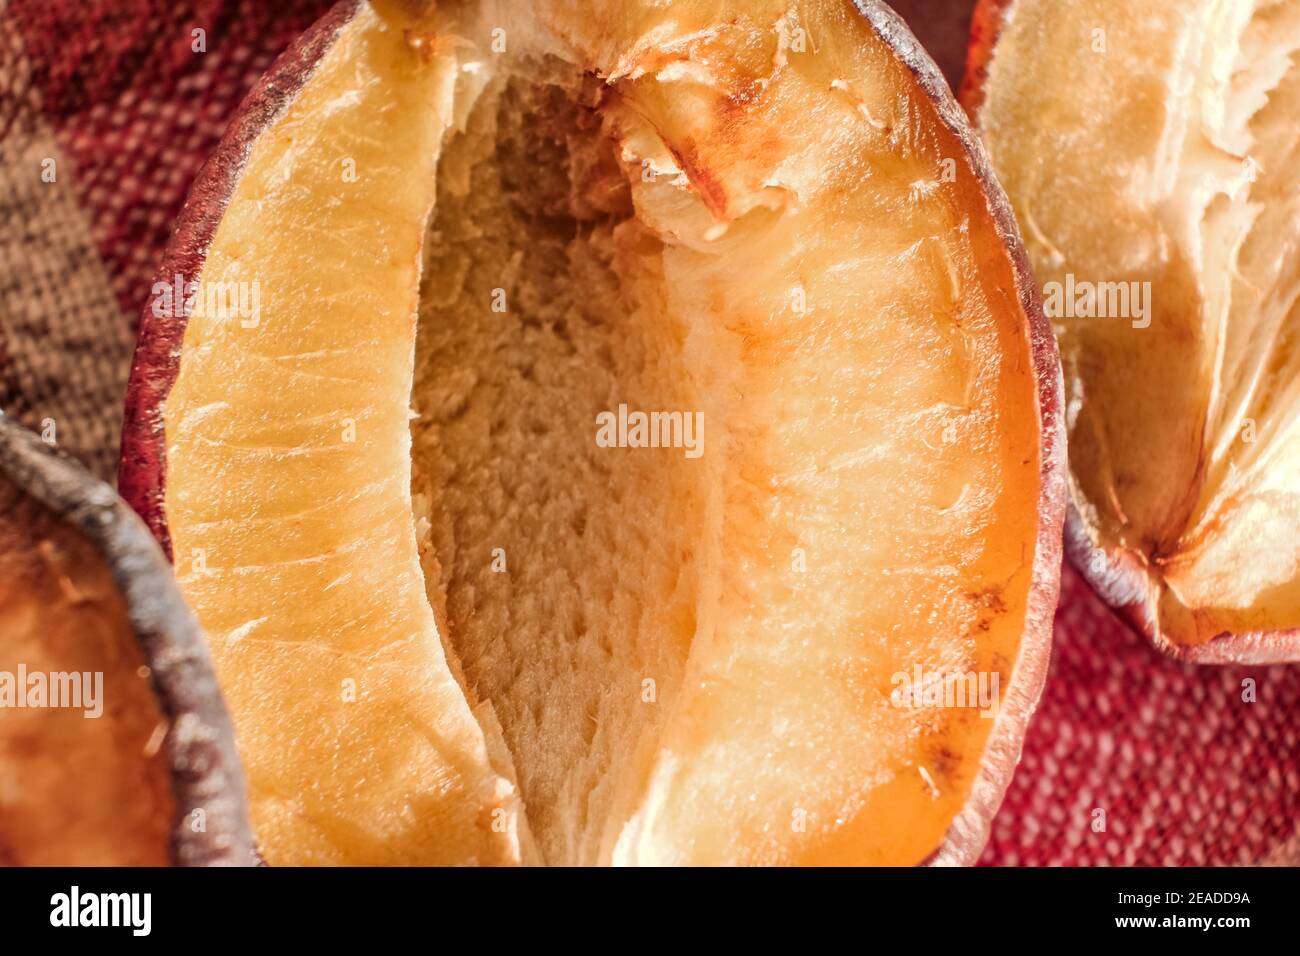 Eine in halbgetrocknete Pflaumenfrucht geschnitten - Makro Aufnahme Stockfoto